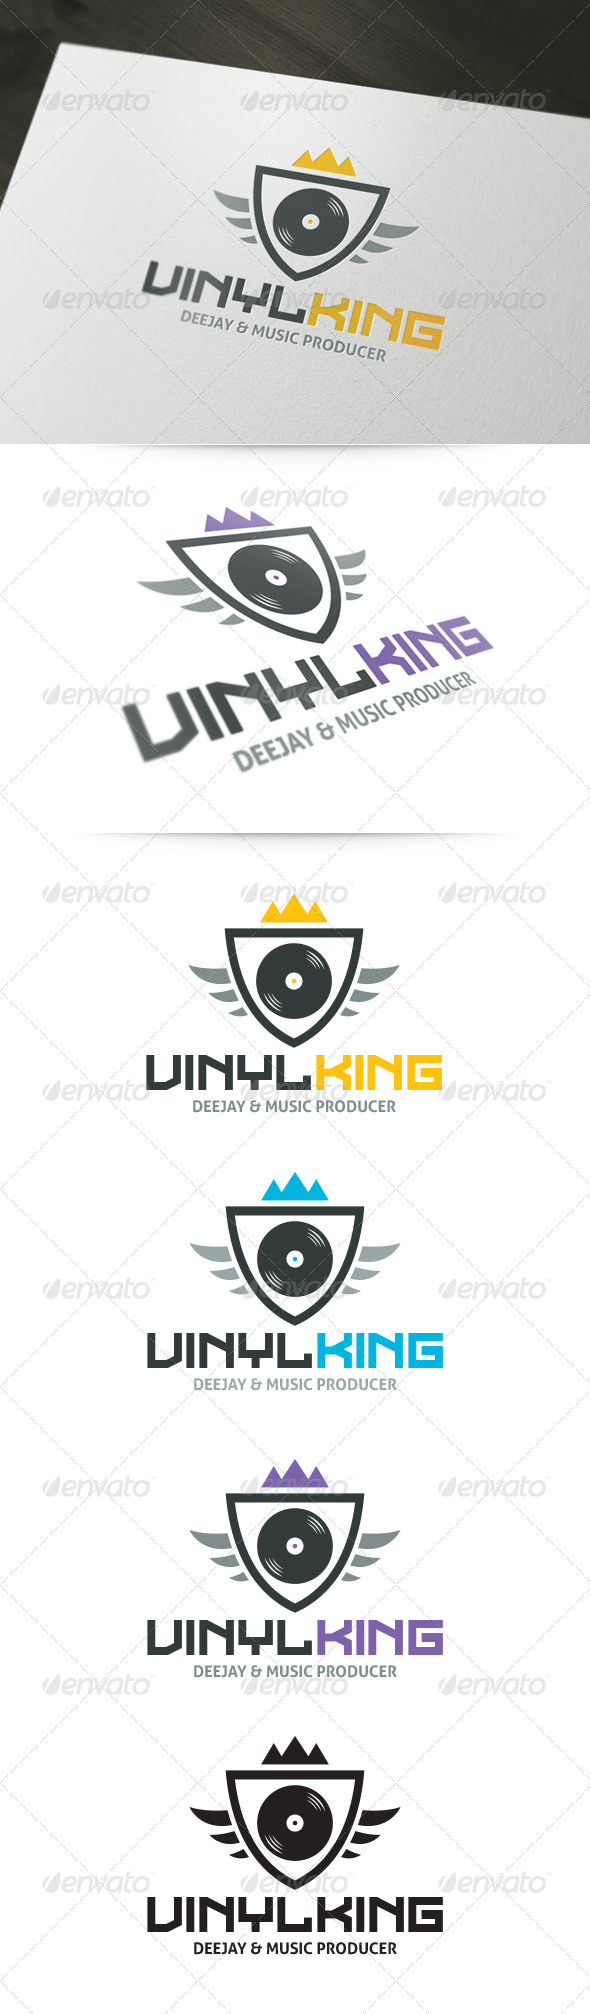 Vinyl King Logo